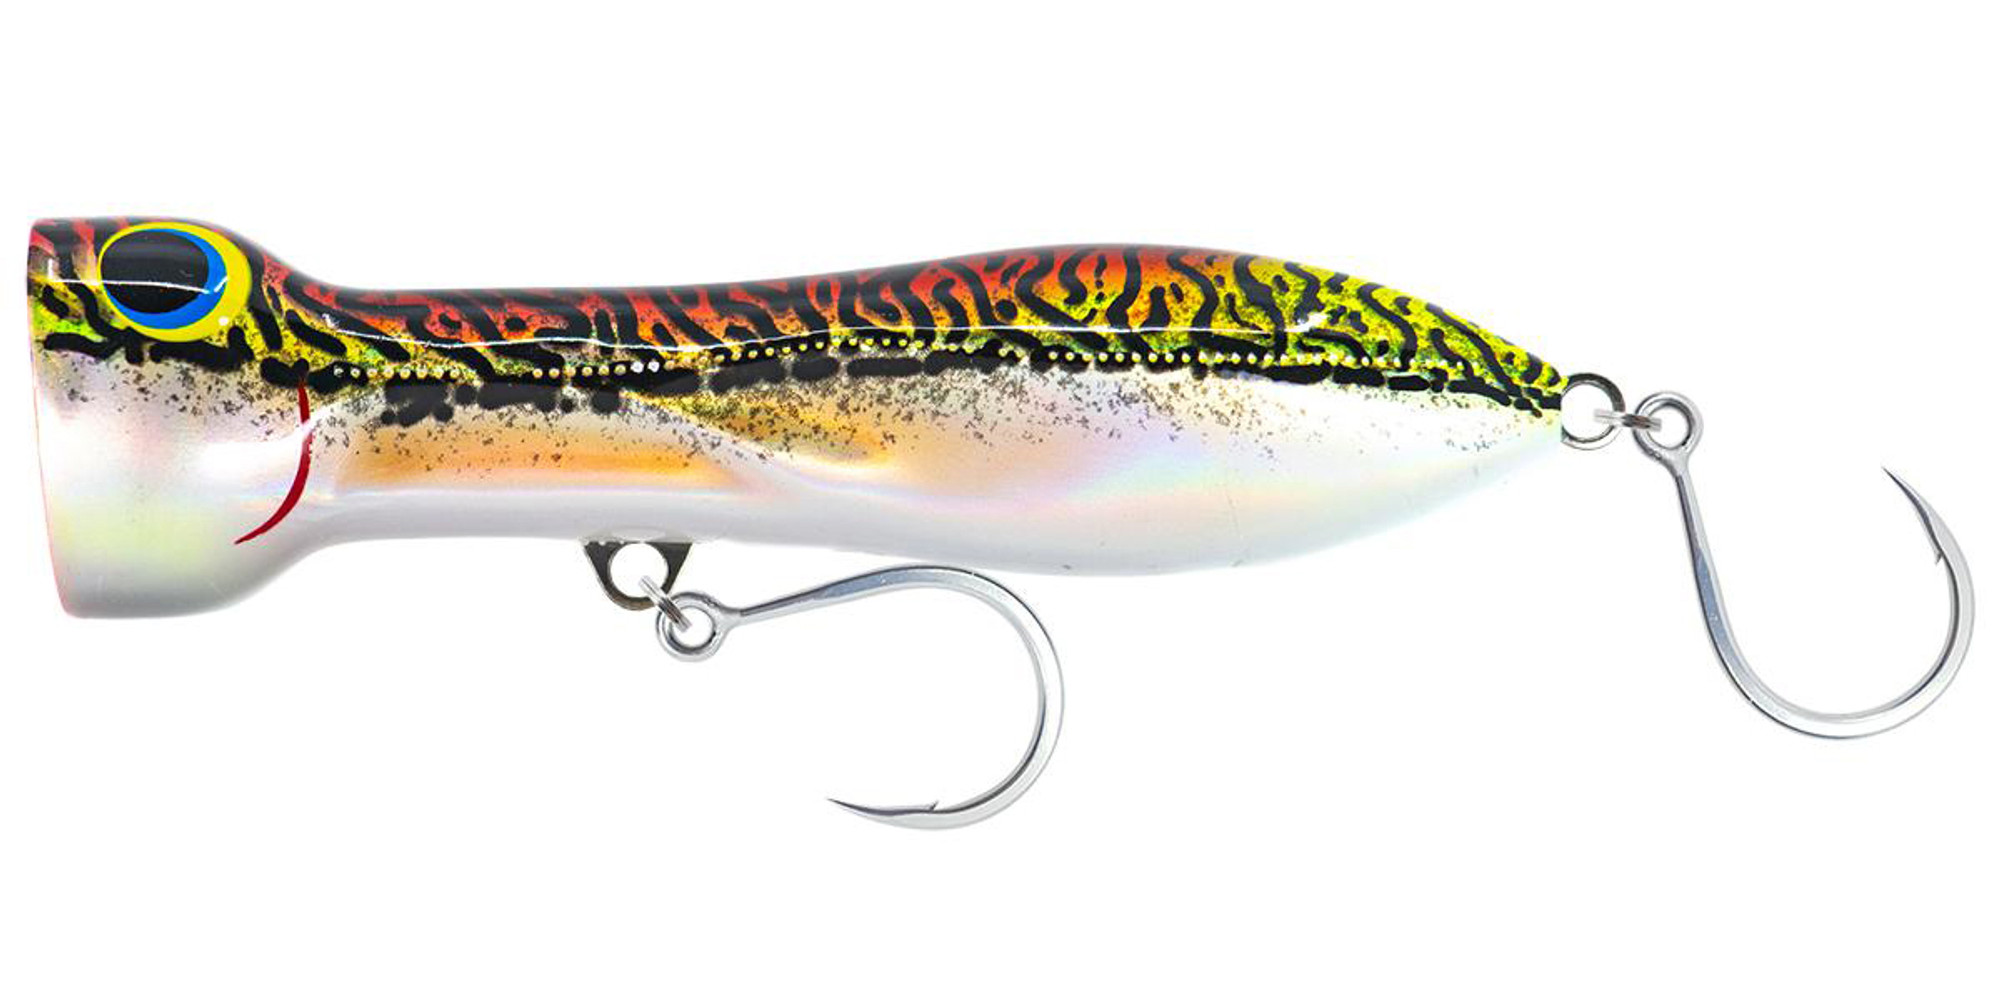 Nomad Design "Chug Norris" Popping Fishing Lure (Color: Chartreuse Orange Mackerel / 150)